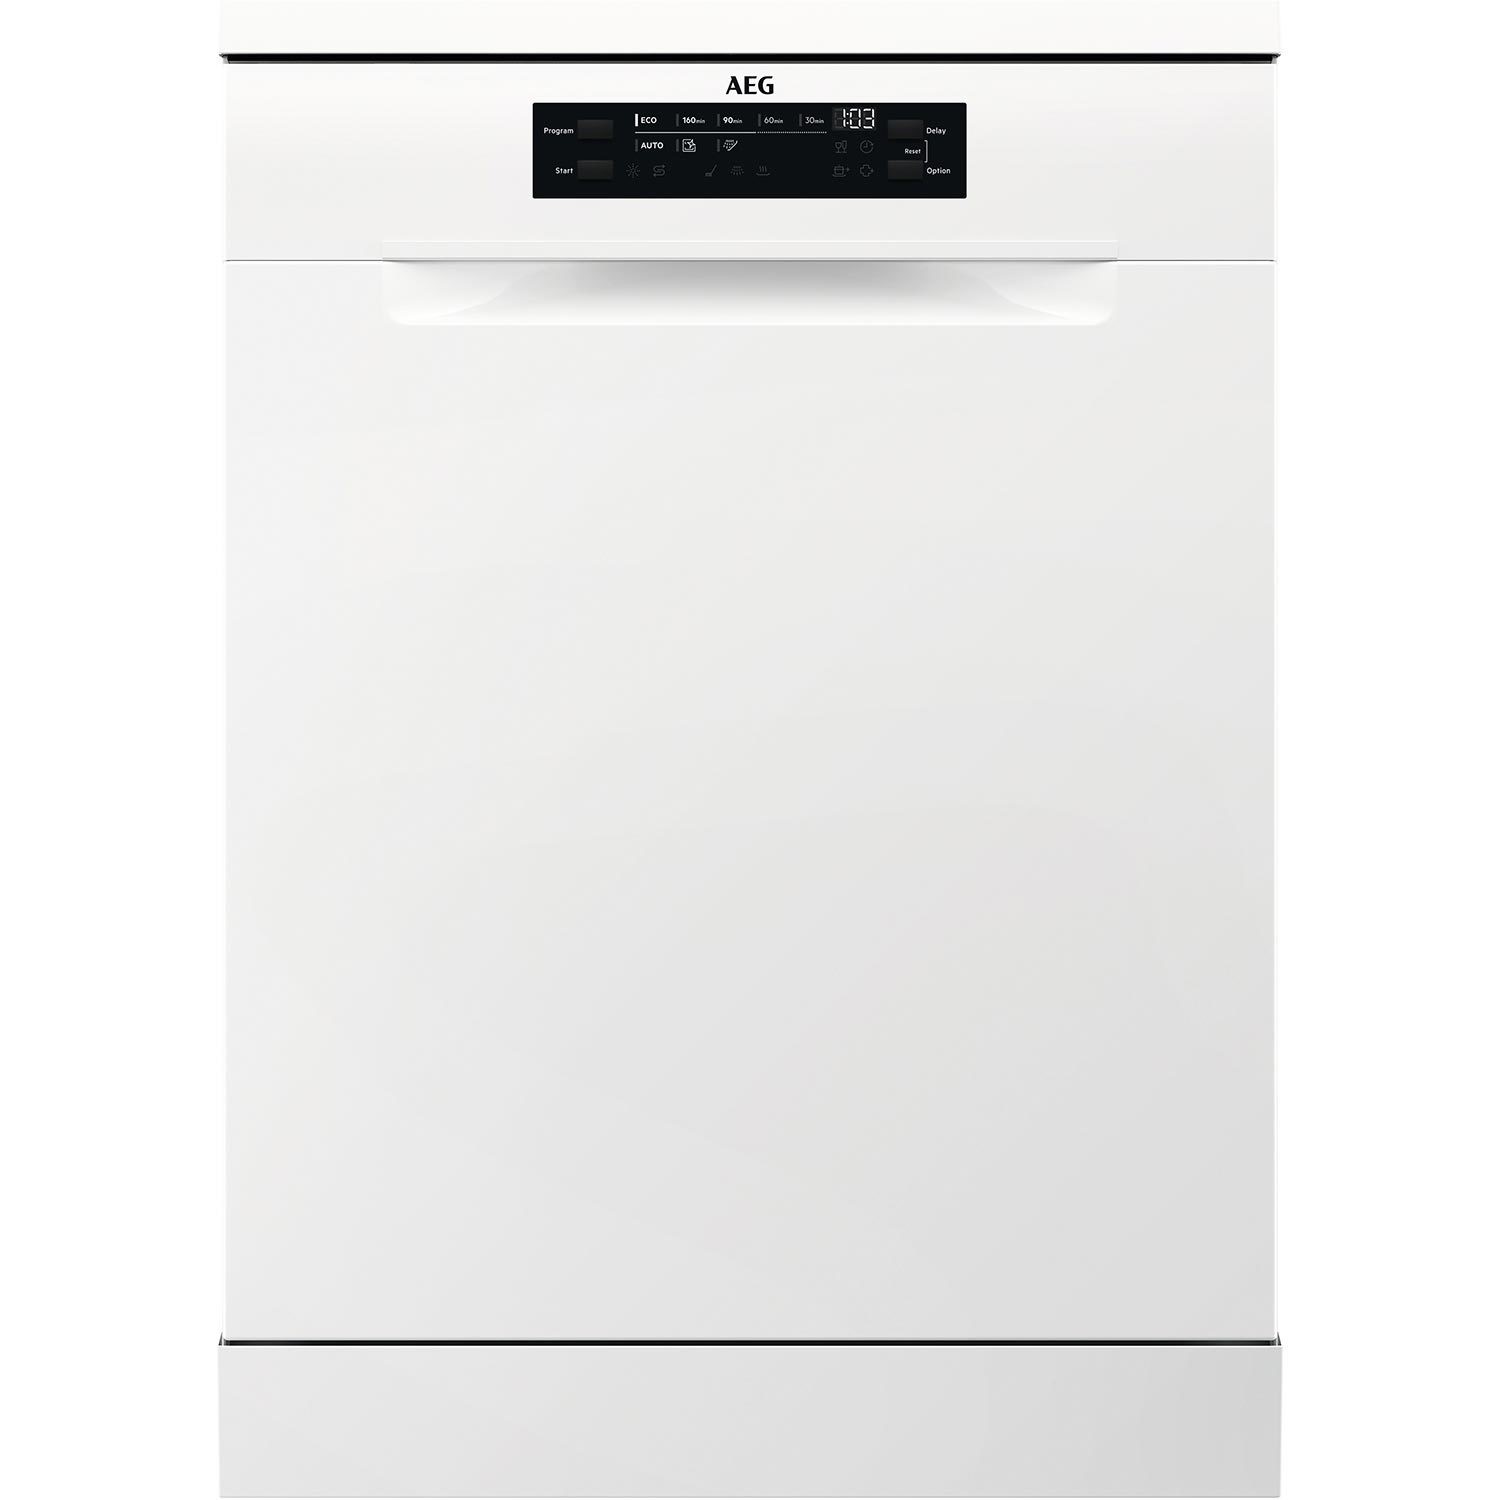 Photos - Dishwasher AEG 6000 Series 14 Place Settings Freestanding  - White FFB53937 